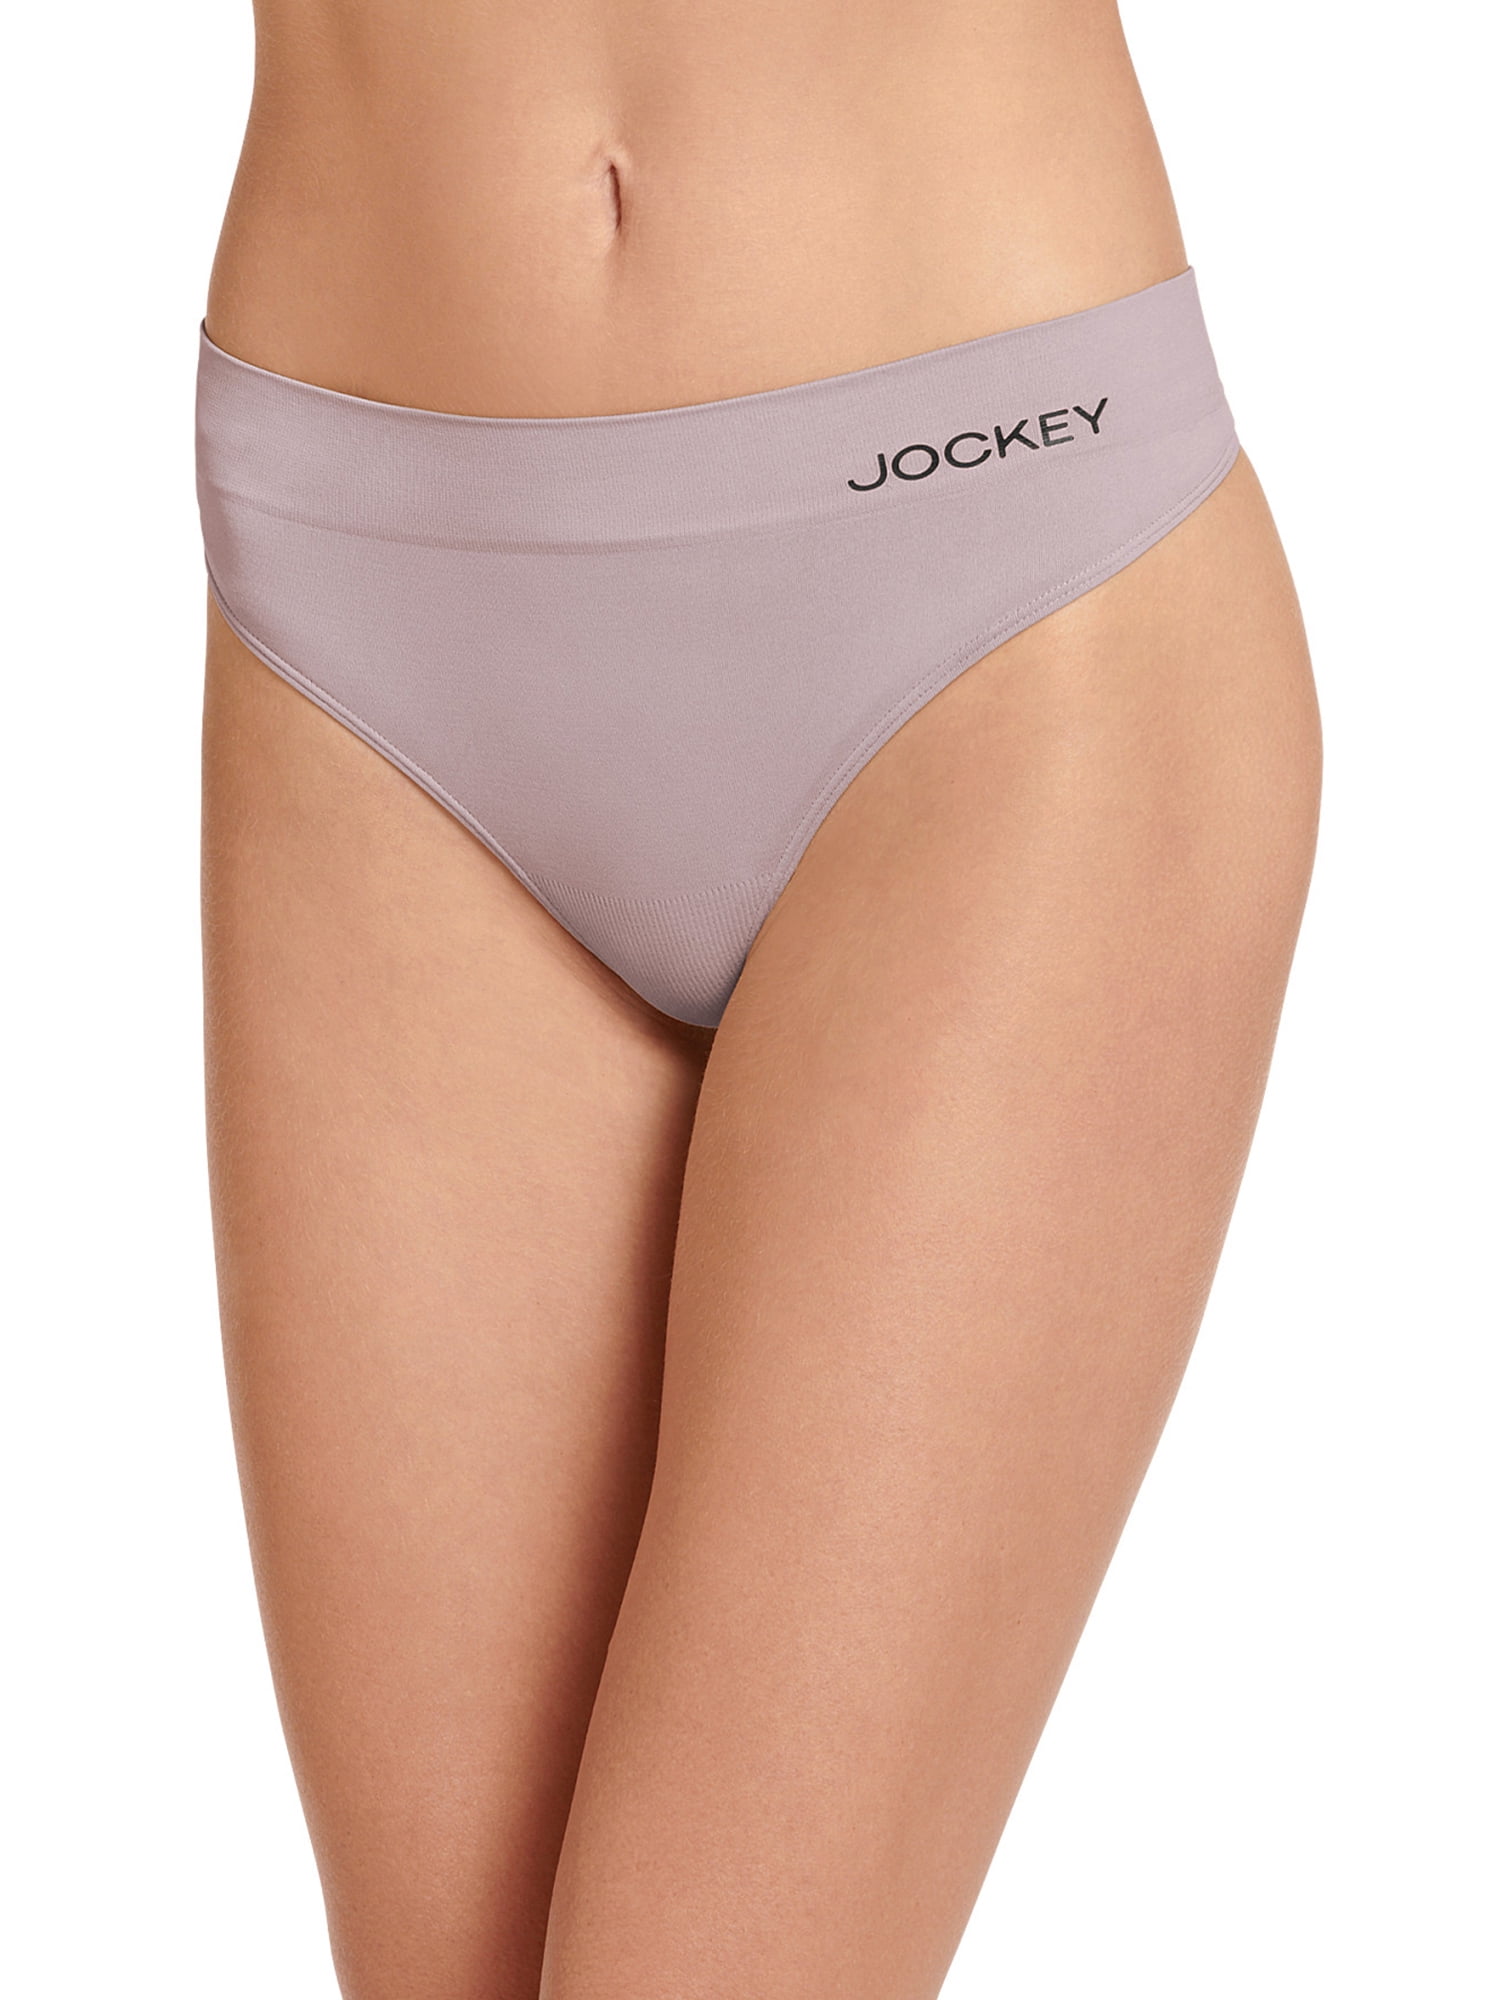 Jockey® Essentials Women's Soft Touch Seamfree® Eco Thong Panties, 3 Pack,  Sizes S-XXXL